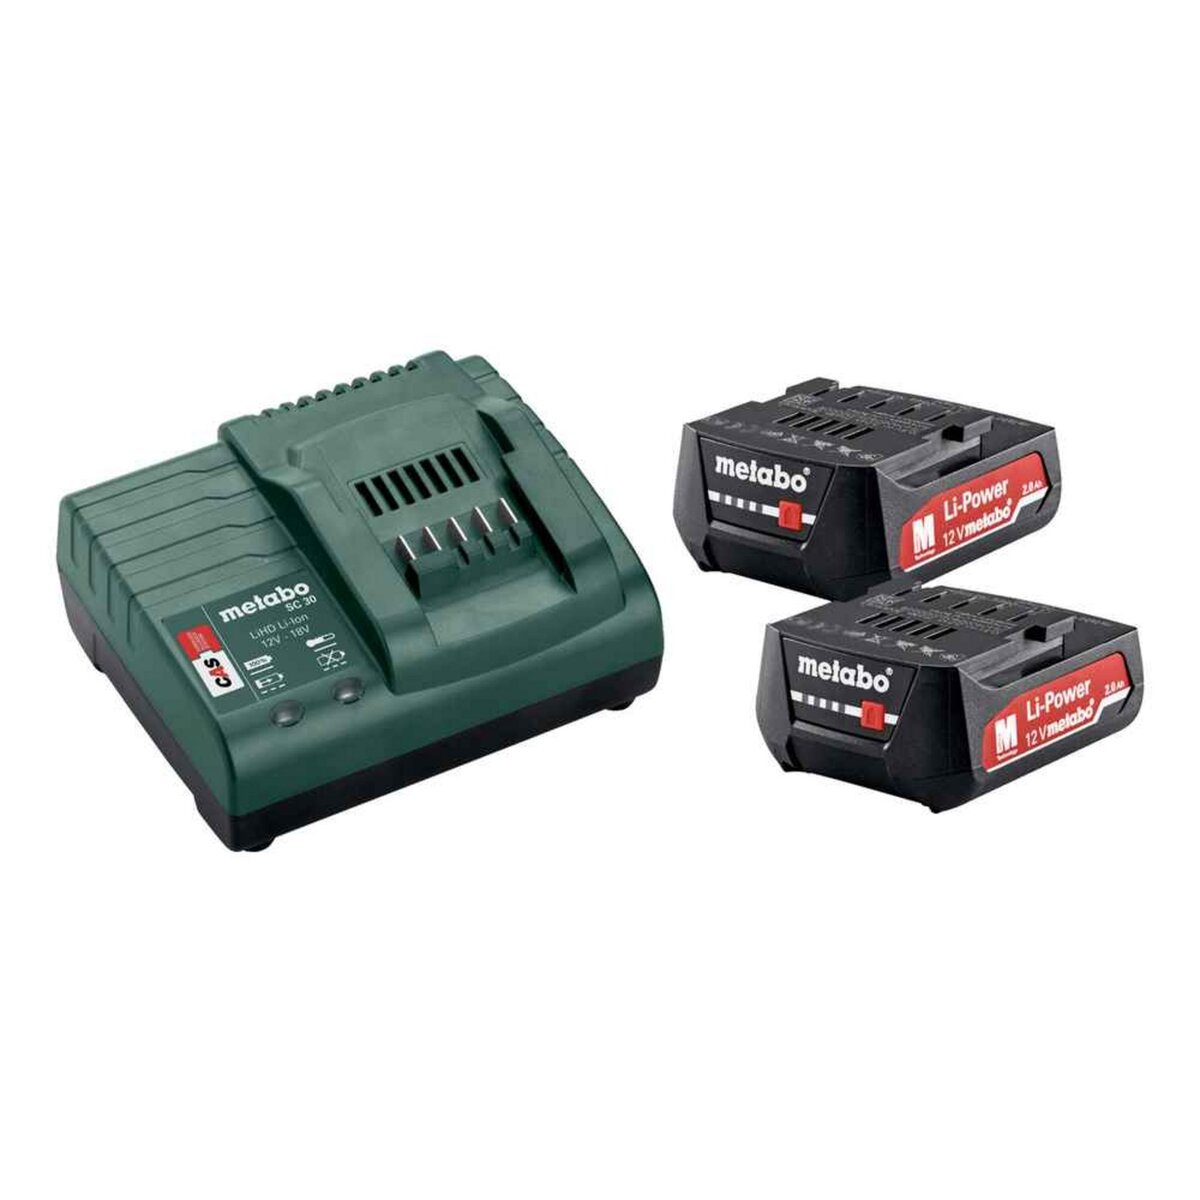 METABO SAS Pack énergie 12 V Pack 2 Batteries 12 Volts + chargeur - 2 x 2,0 Ah Li-Power, SC 30